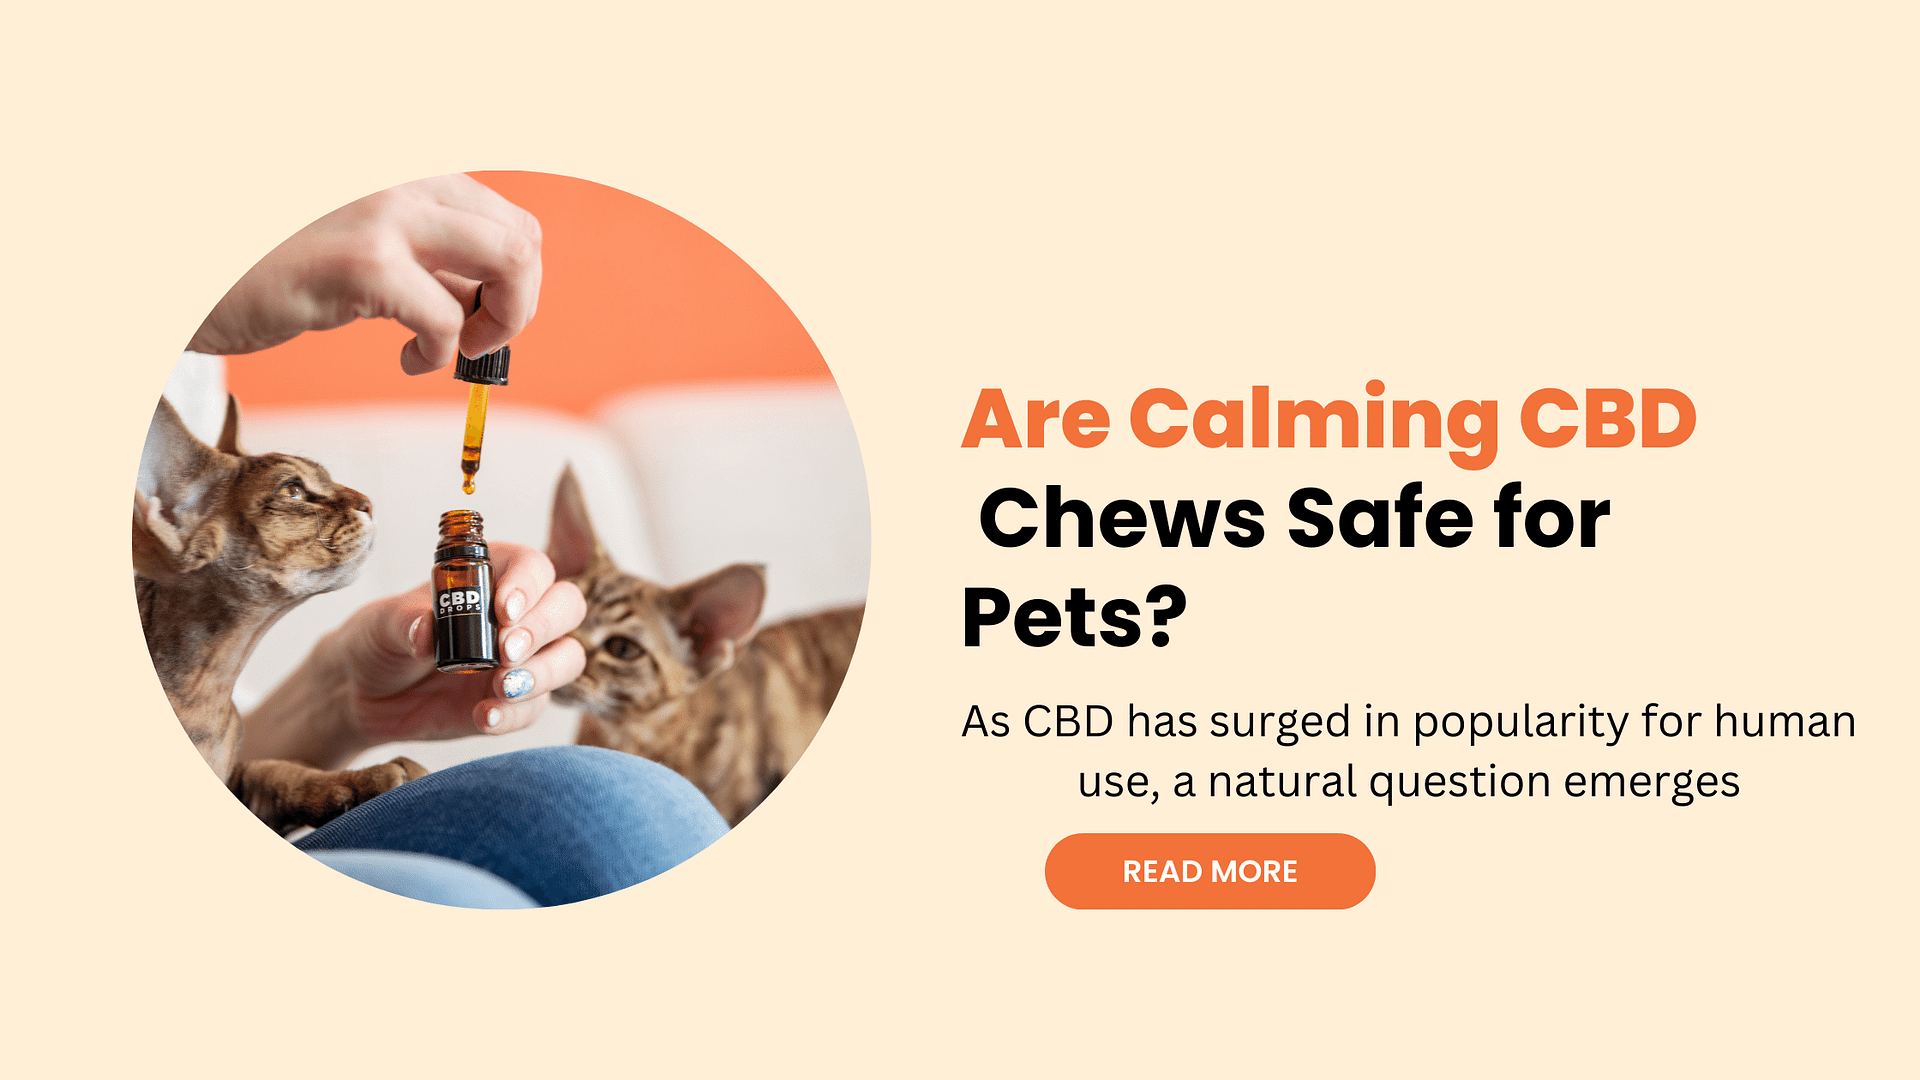 Calming CBD Chews Safe for Pets